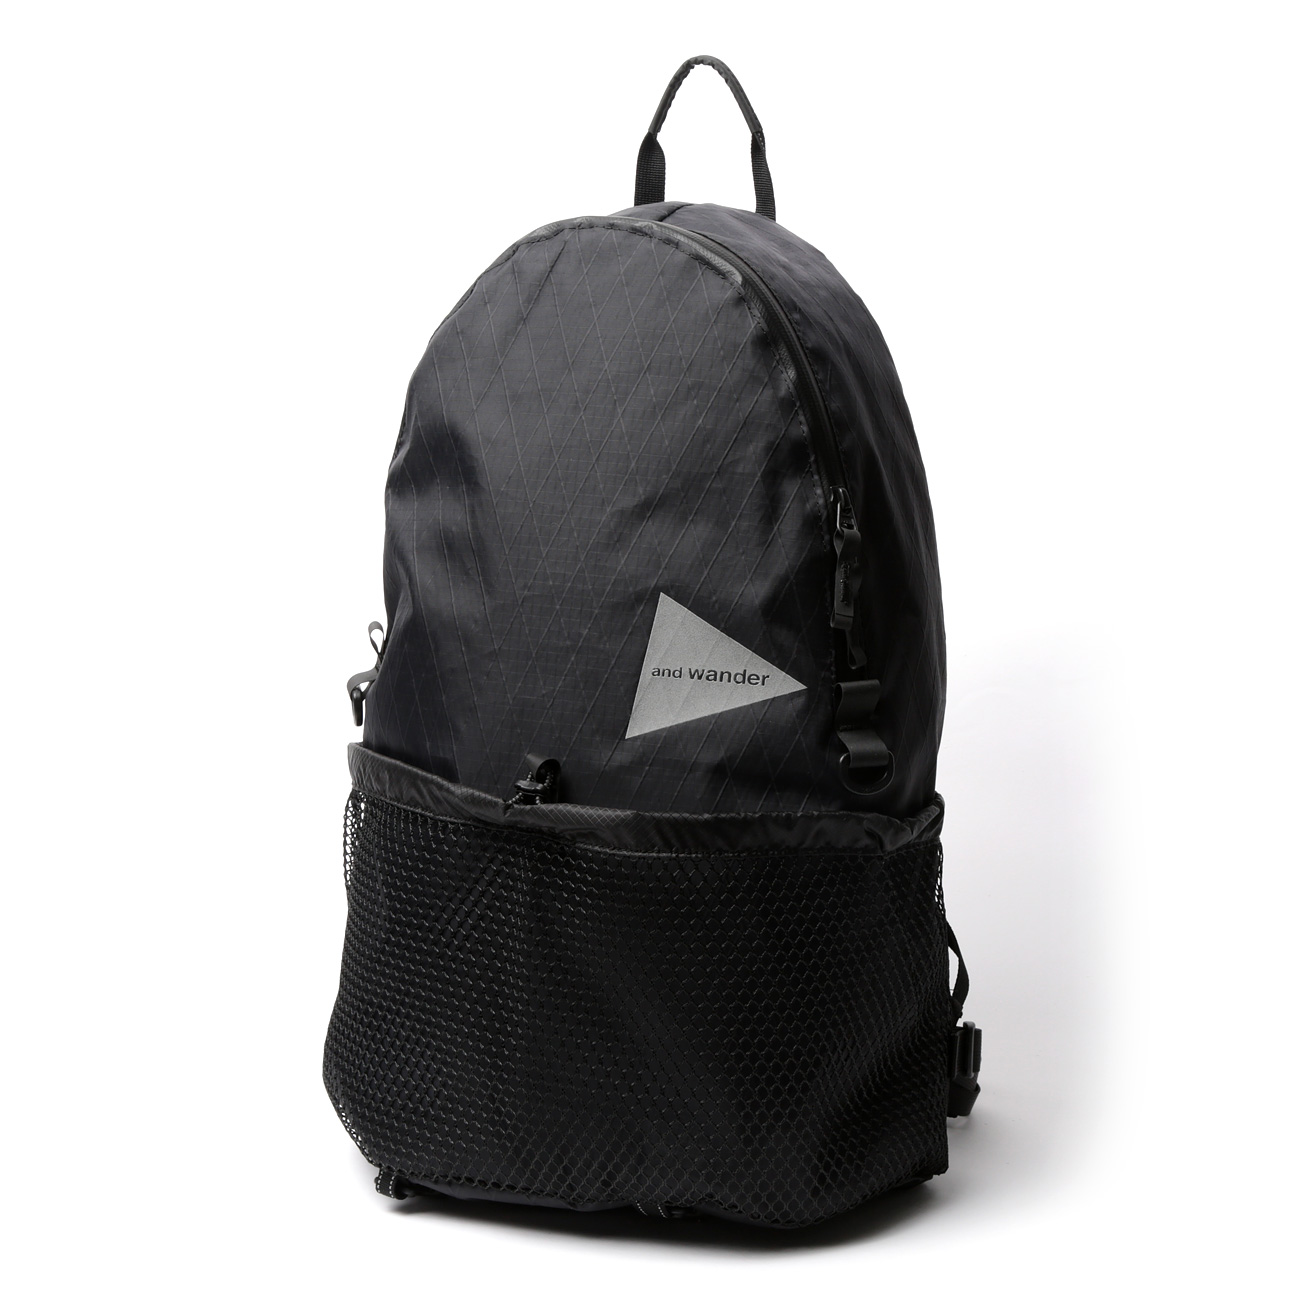 X-Pac 20L backpack - Black